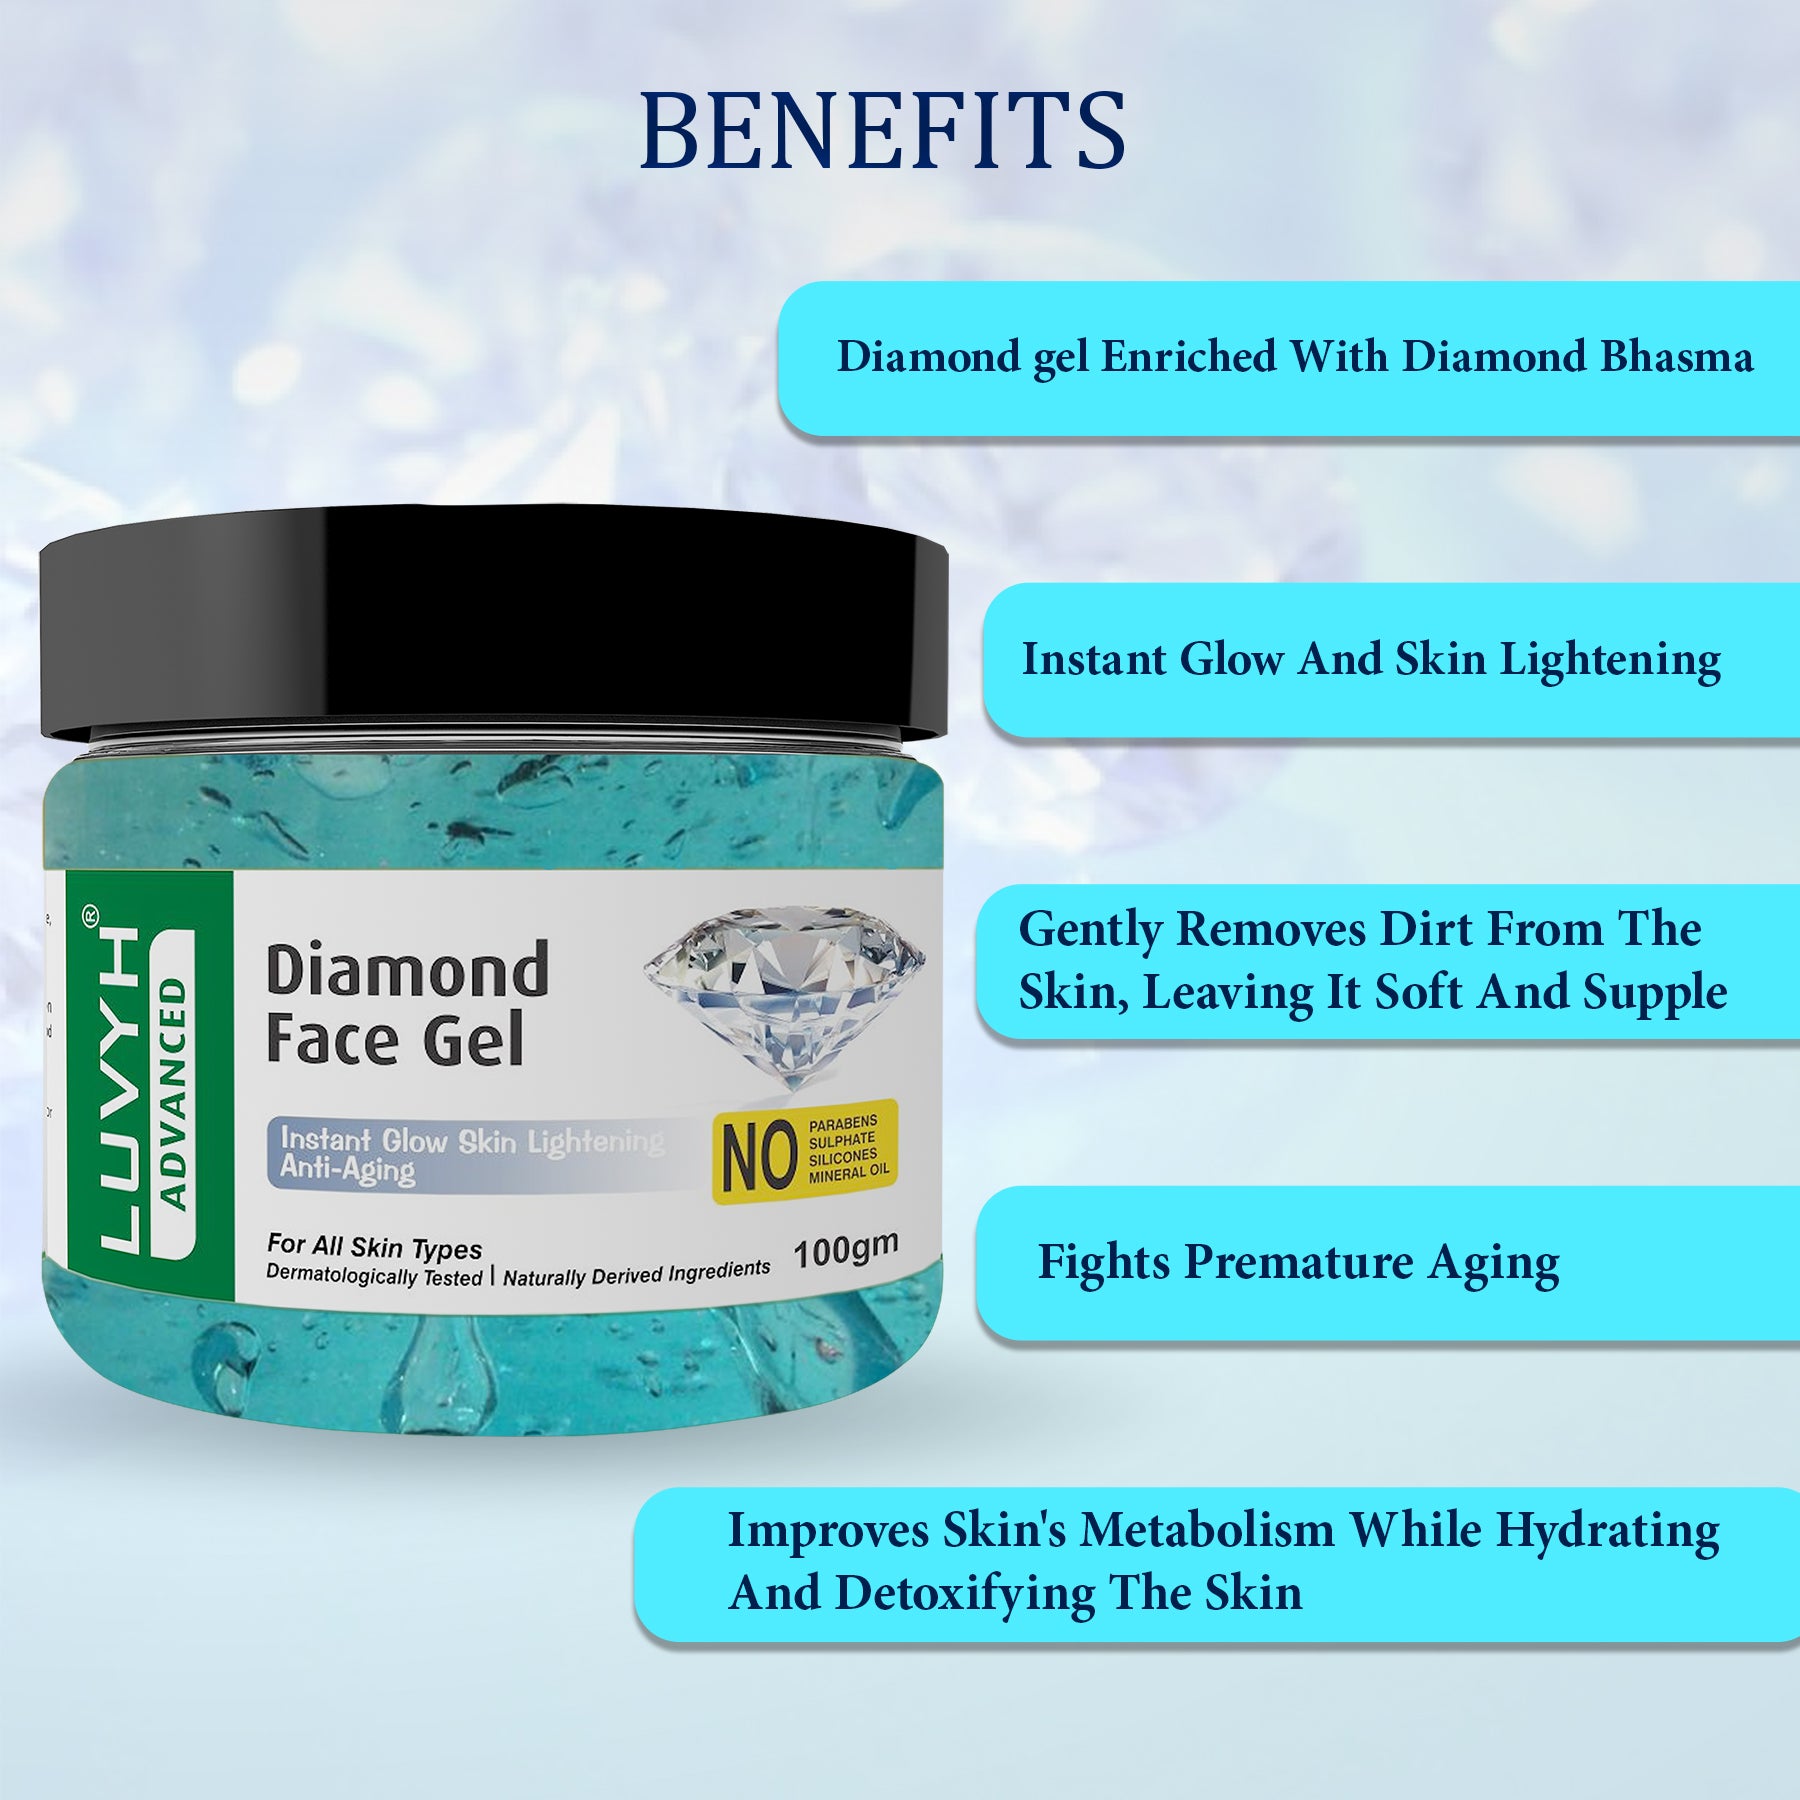 Benefits of Diamond Face Gel